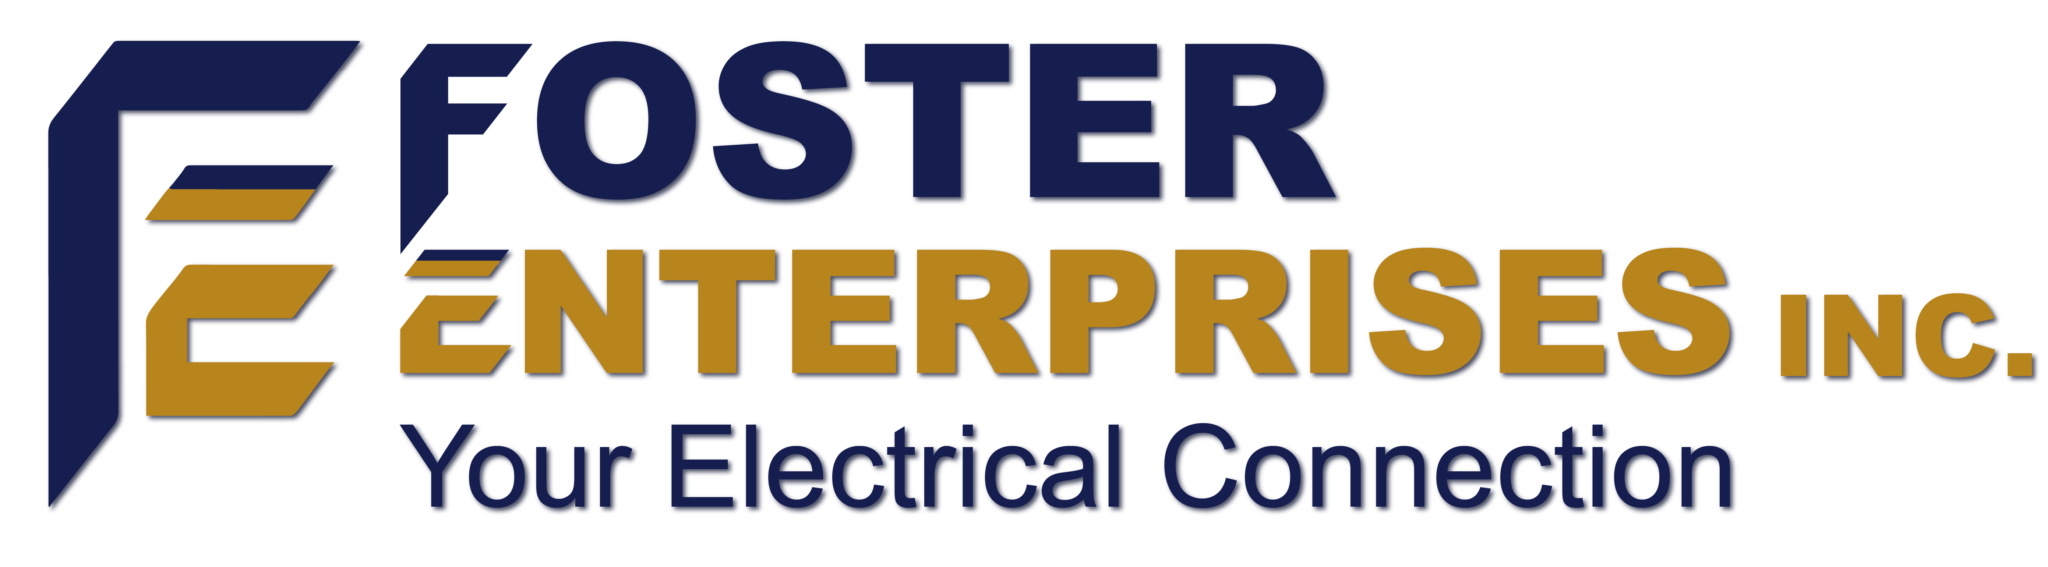 Foster Enterprises Electrical